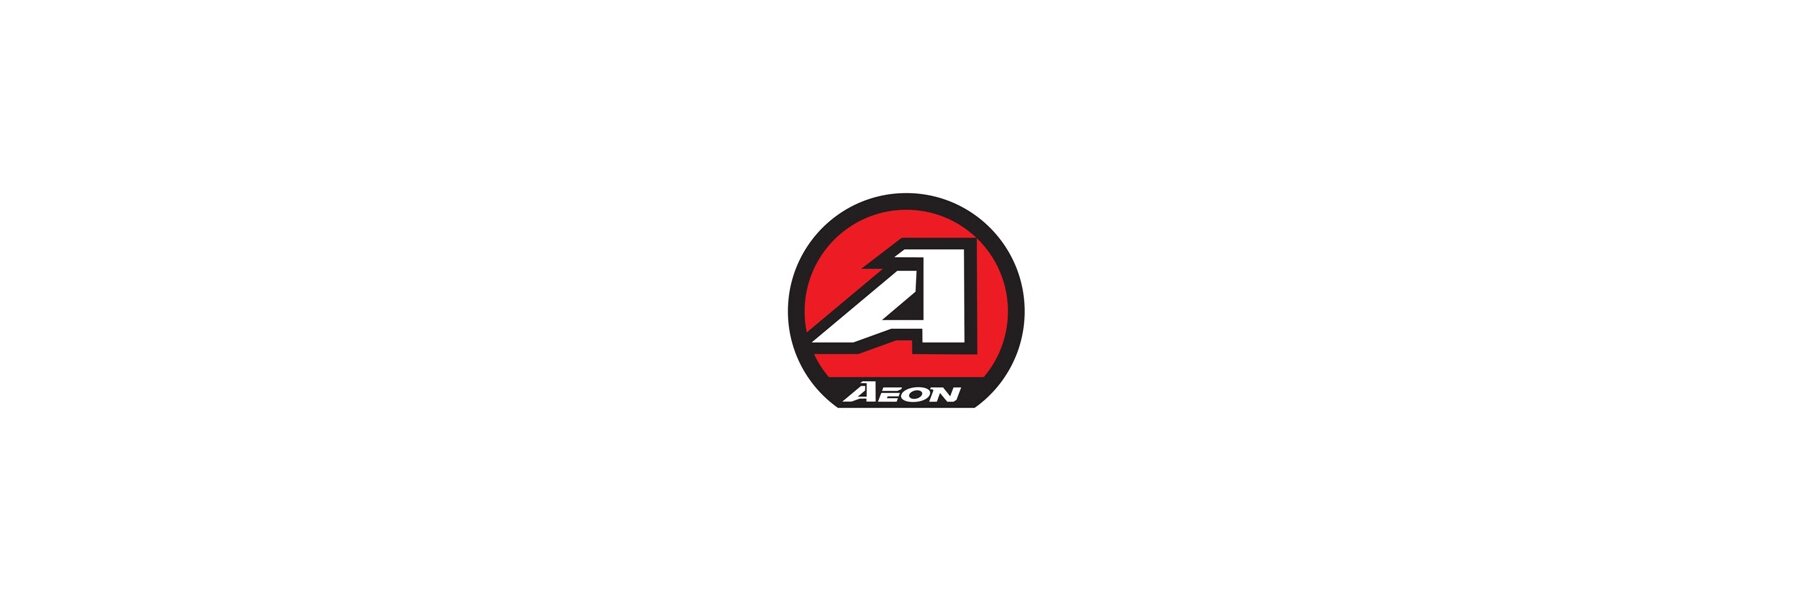 Aeon Original Ersatzteile - Boxit24